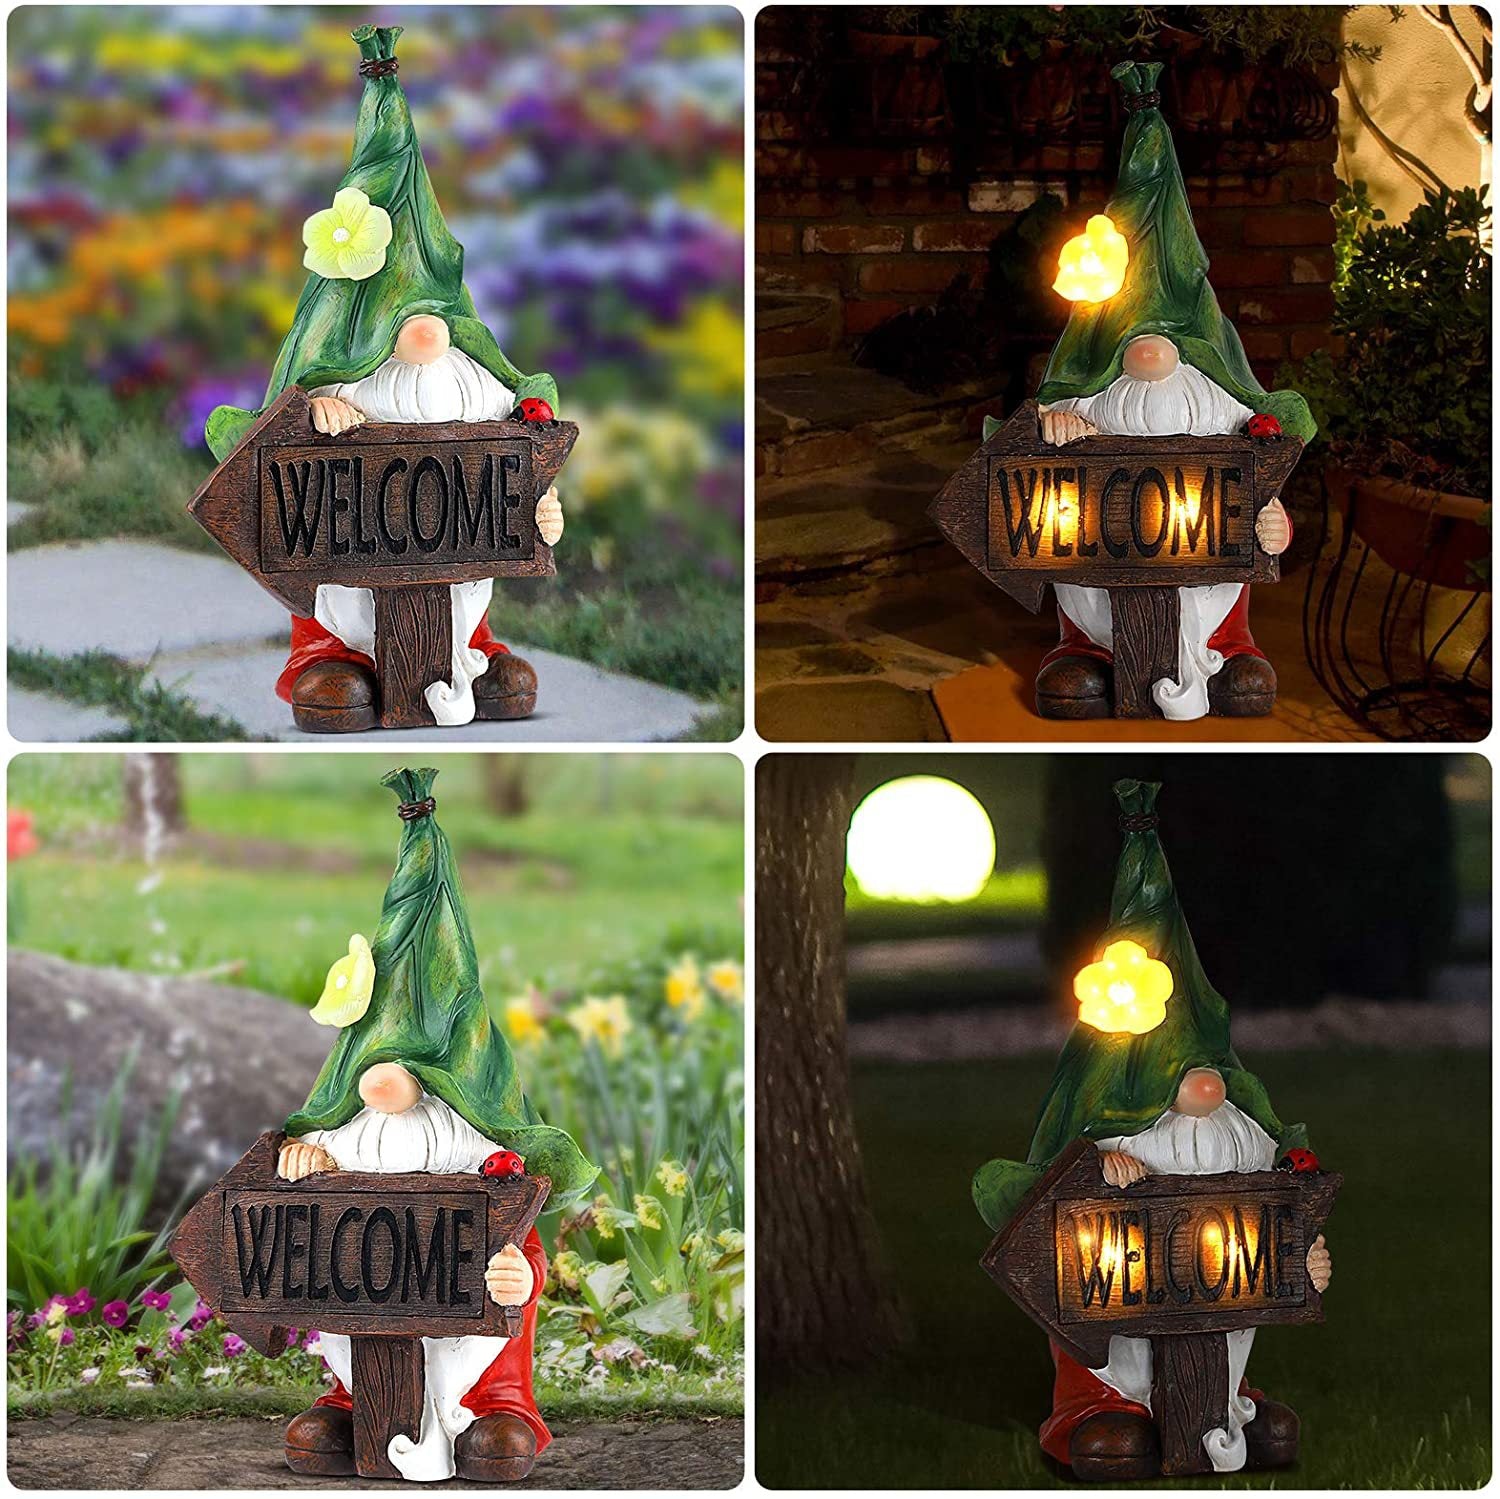 Creative Outdoor Solar Decorative Lamp Garden Garden Crafts Resin Statue Ornaments